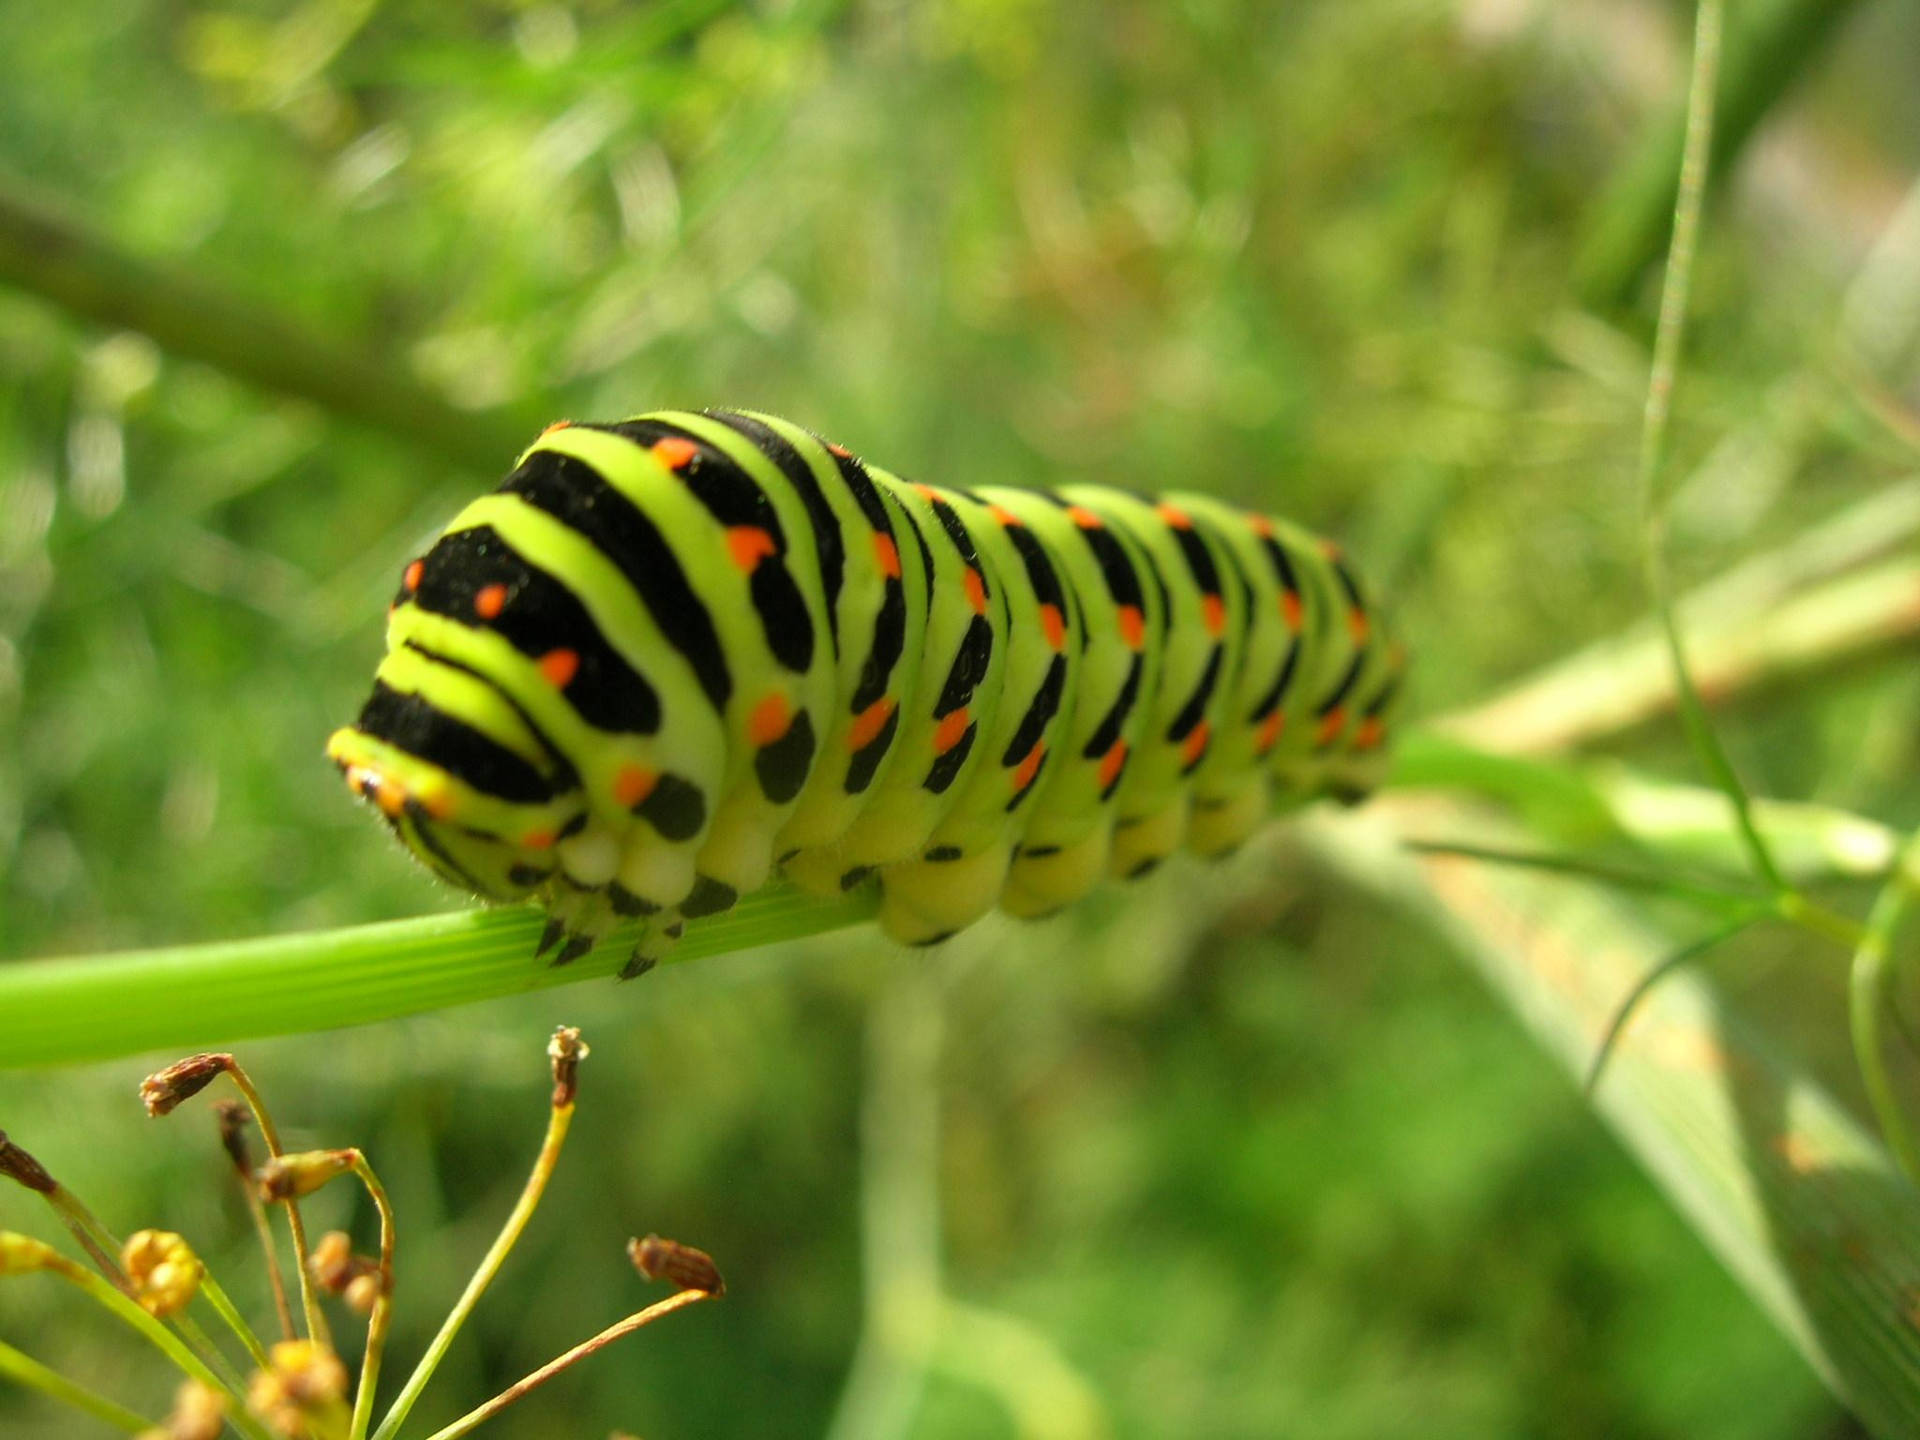 Green Caterpillar With Short Legs Background